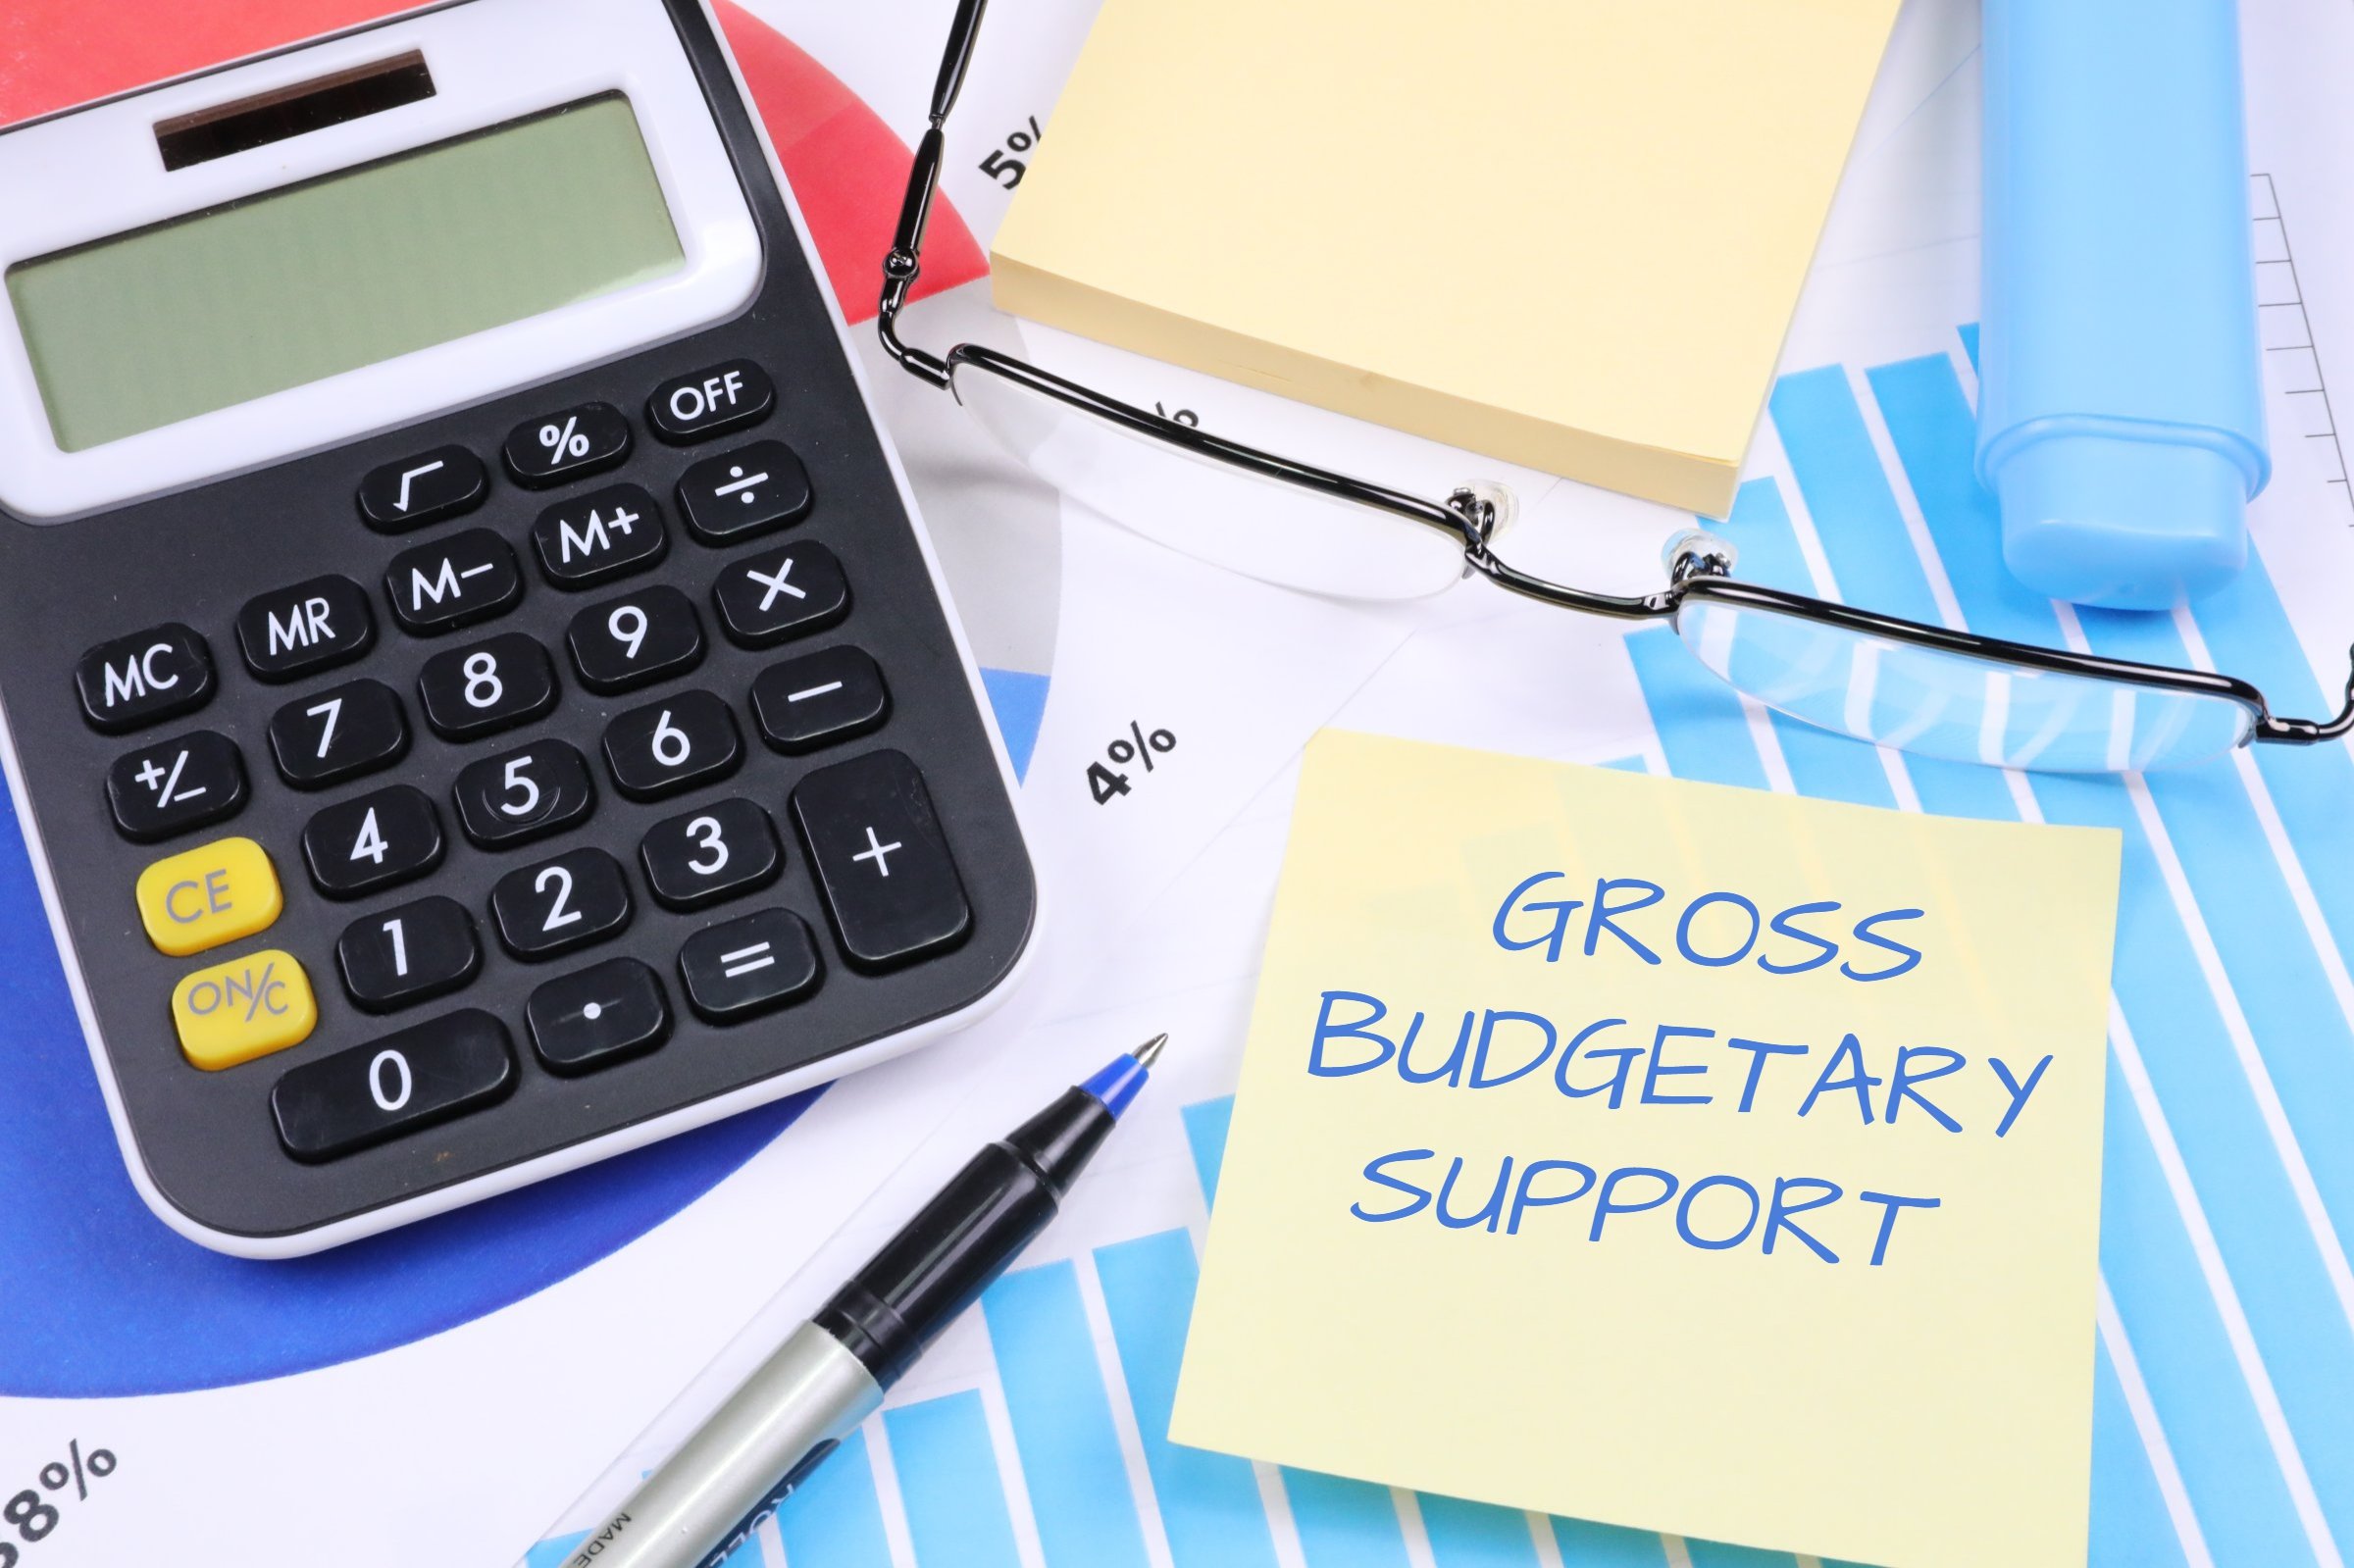 Gross Budgetary Support